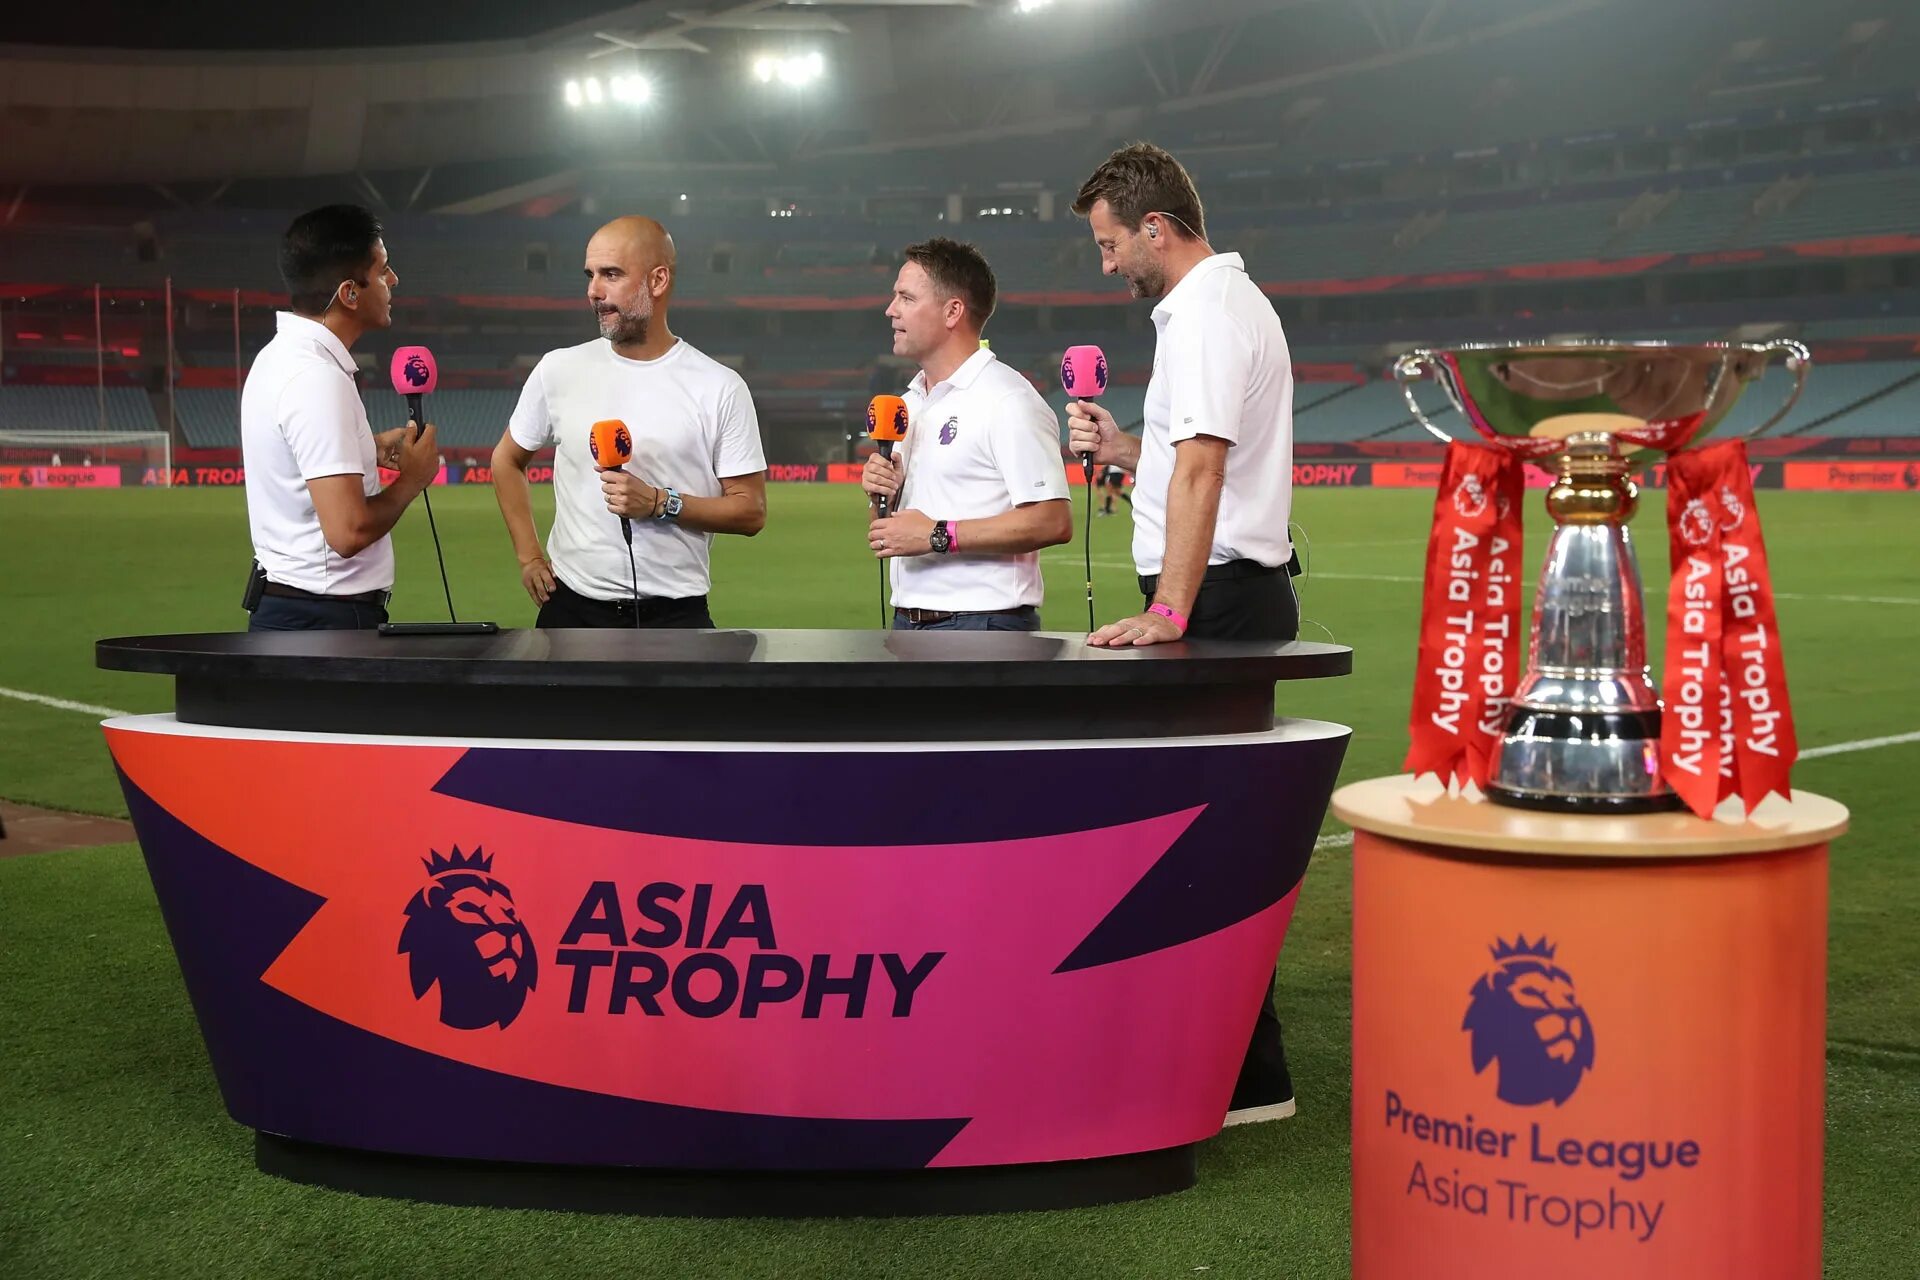 Турнир премьер. Premier League Asia Trophy. Premier League Asia Trophy 2017. Asian League. Trillion Trophy Asia.